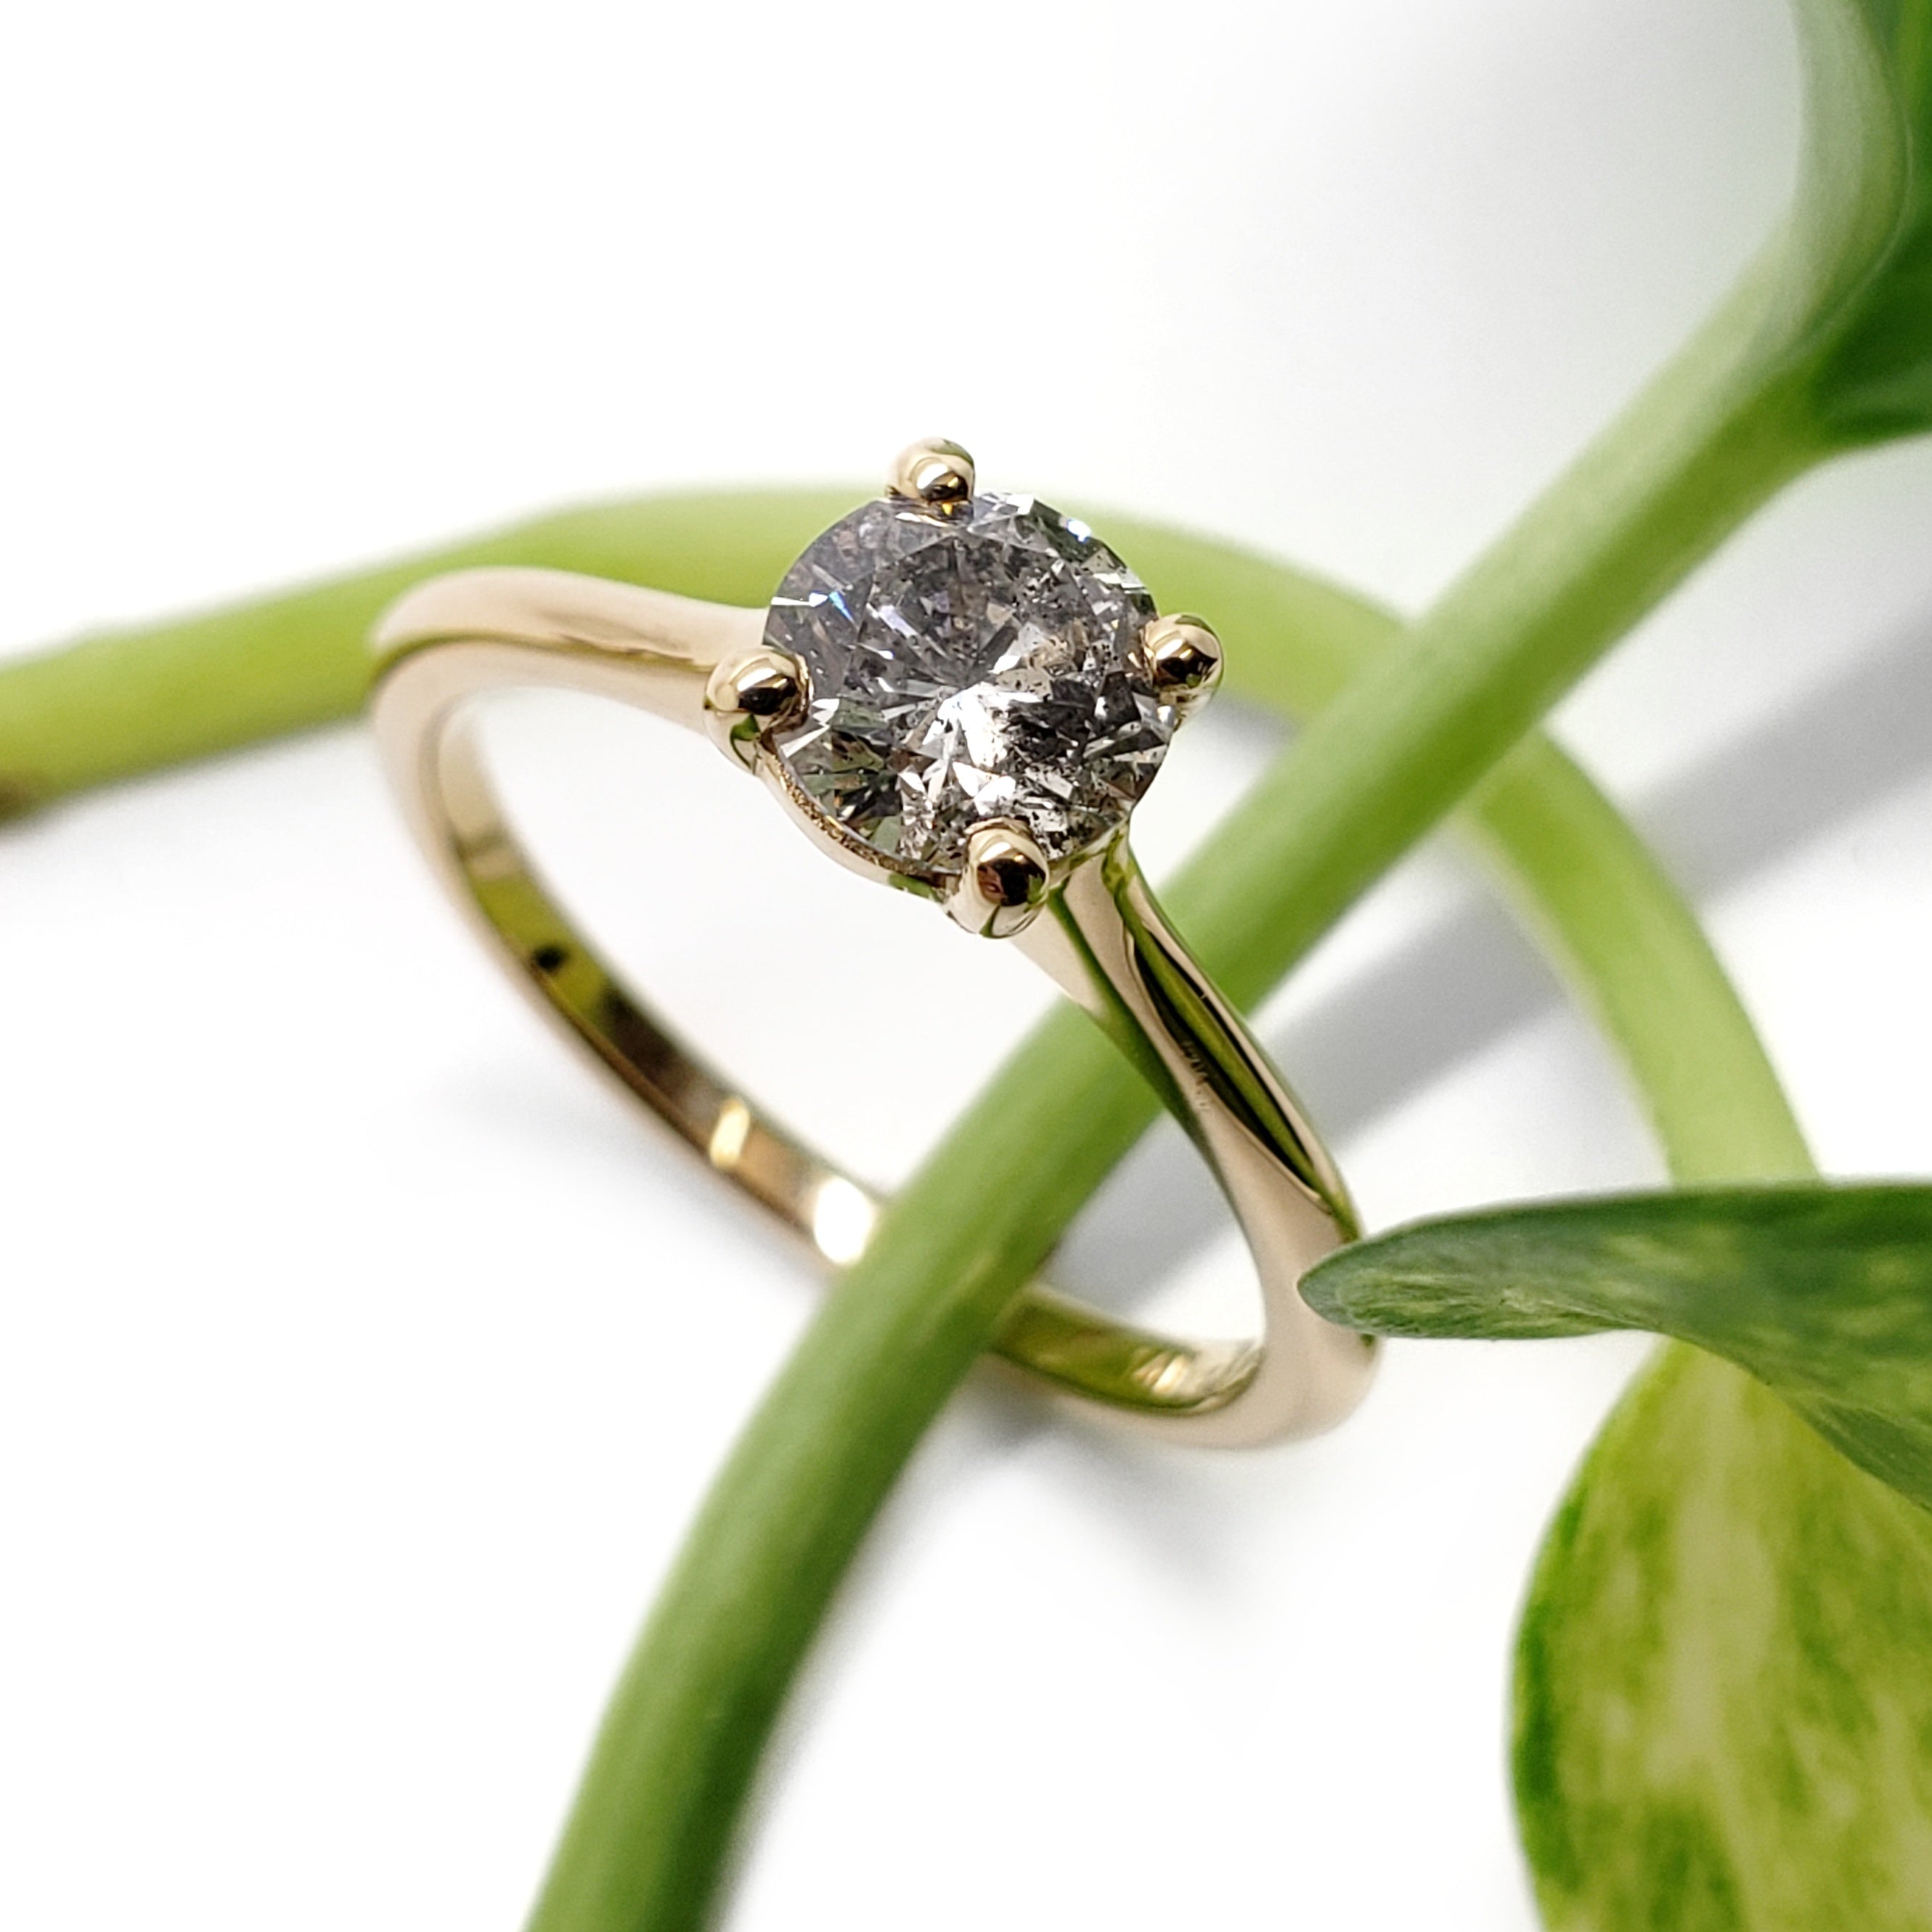 Salt & Pepper Diamond Engagement Ring | Era Design Vancouver Canada